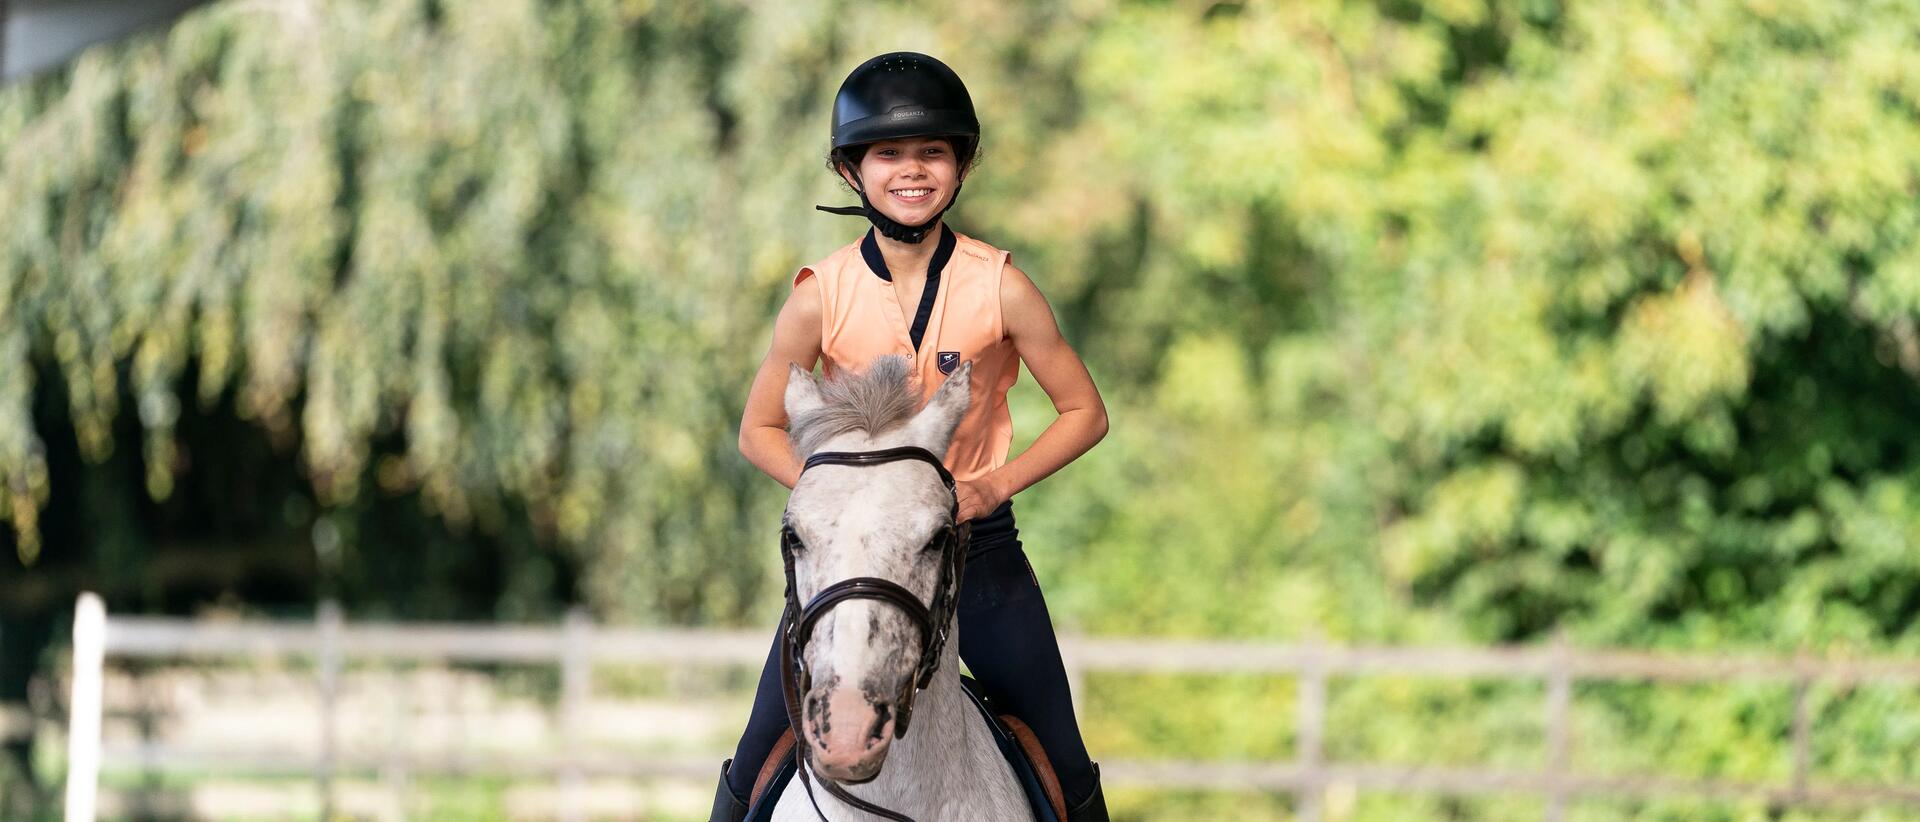 A little girl riding on a Horse wearing a Helmet